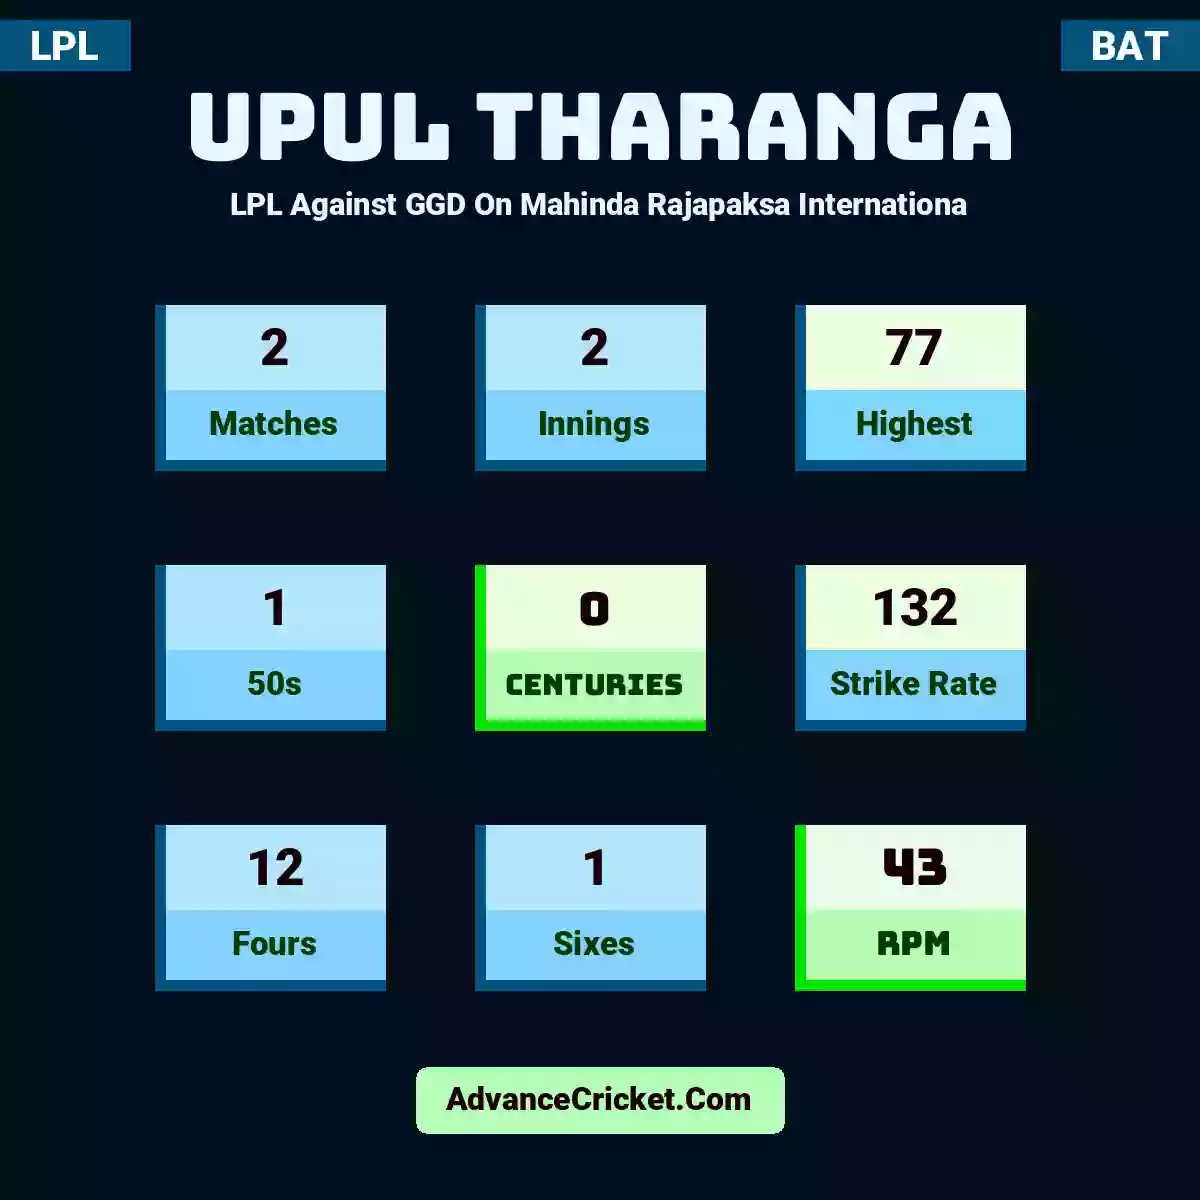 Upul Tharanga LPL  Against GGD On Mahinda Rajapaksa Internationa, Upul Tharanga played 2 matches, scored 77 runs as highest, 1 half-centuries, and 0 centuries, with a strike rate of 132. U.Tharanga hit 12 fours and 1 sixes, with an RPM of 43.